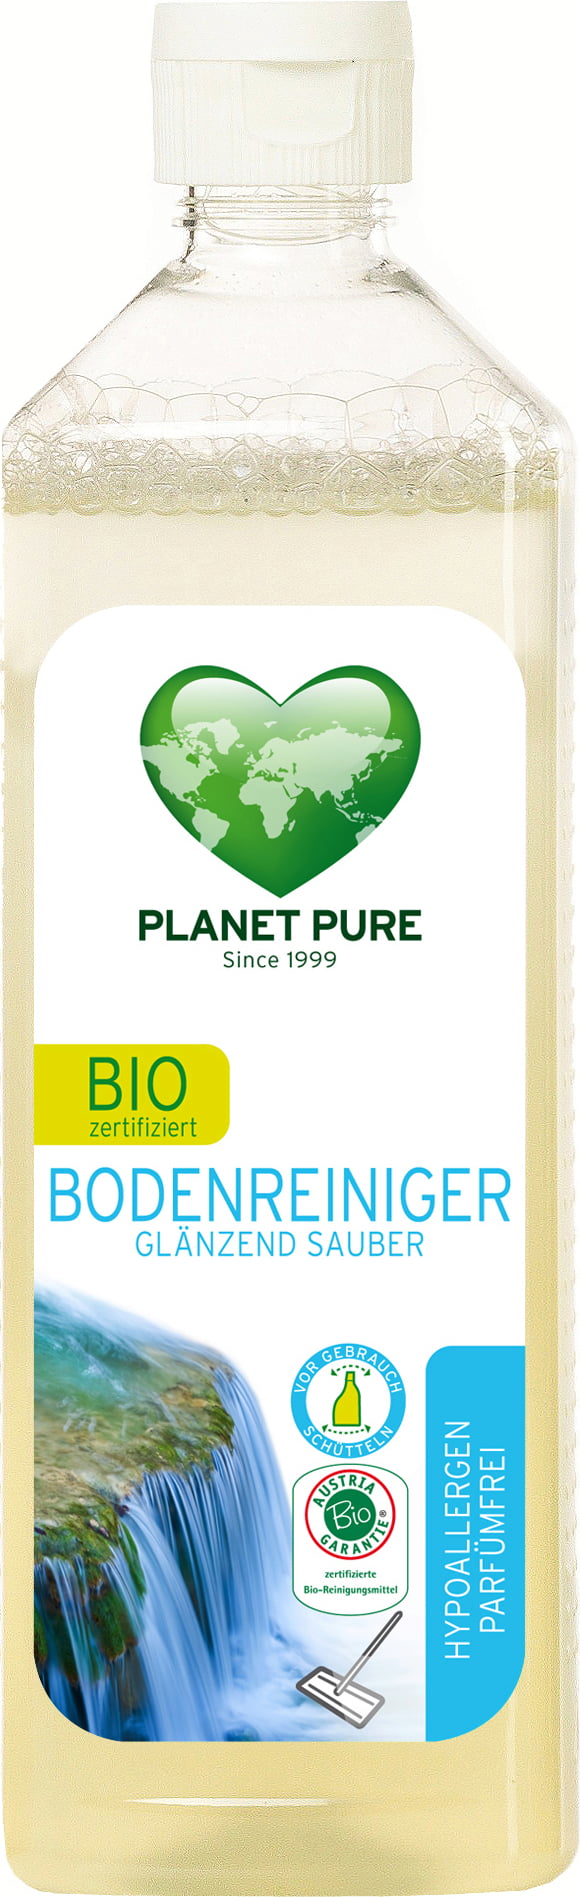 Detergent bio pentru pardoseli hipoalergen - fara parfum - 510ml Planet Pure